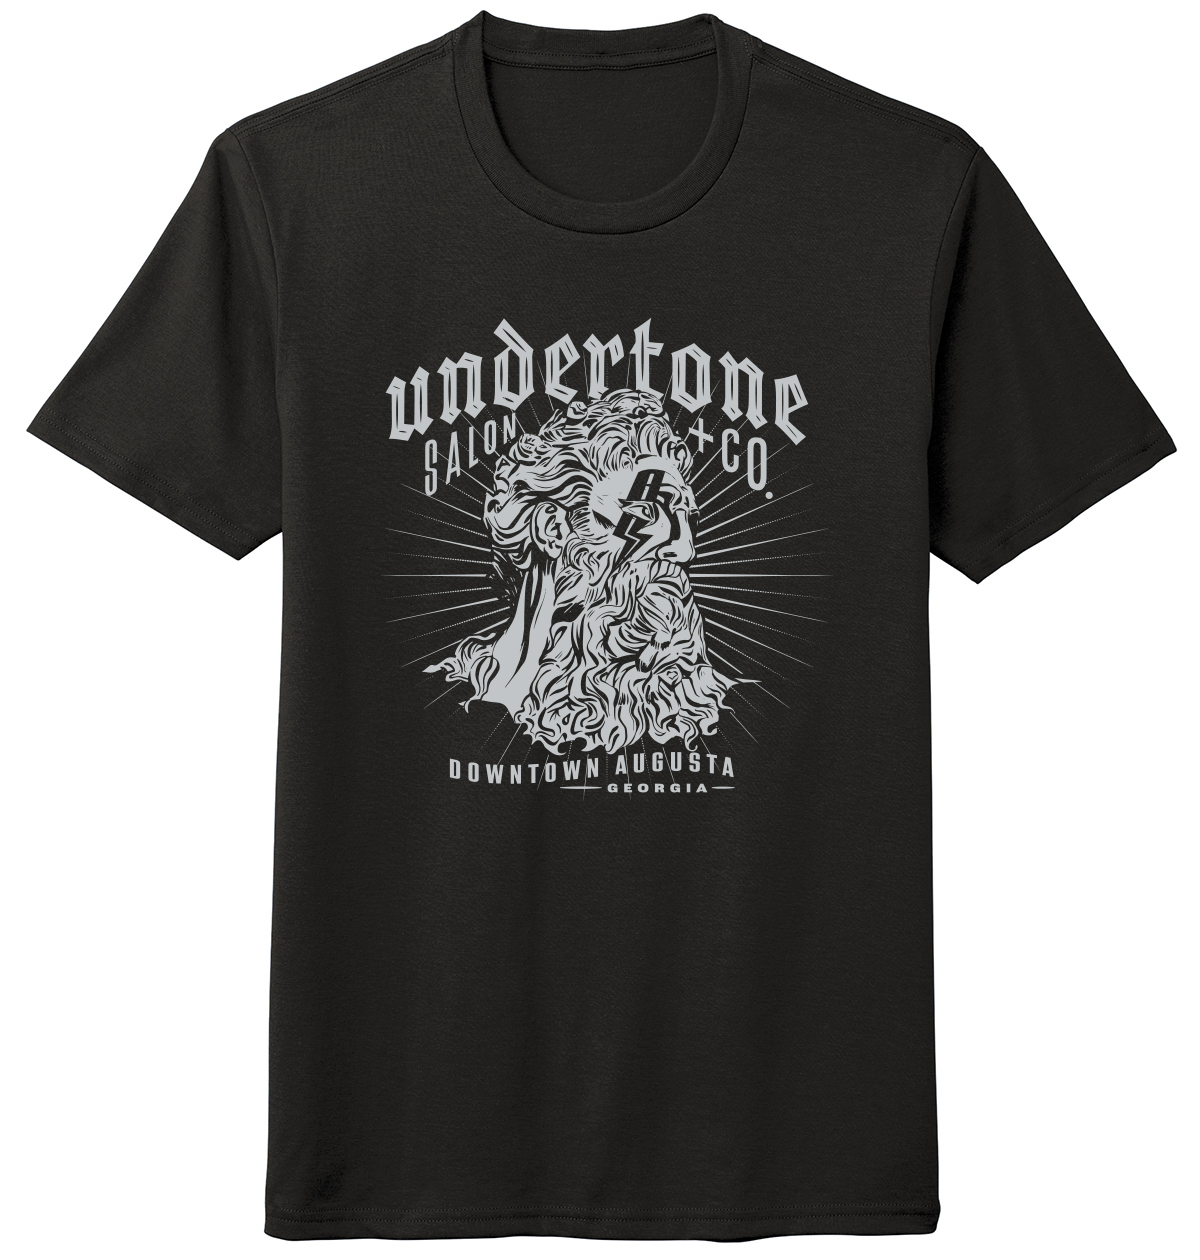 Undertone Salon & Co - We Give a Shirt